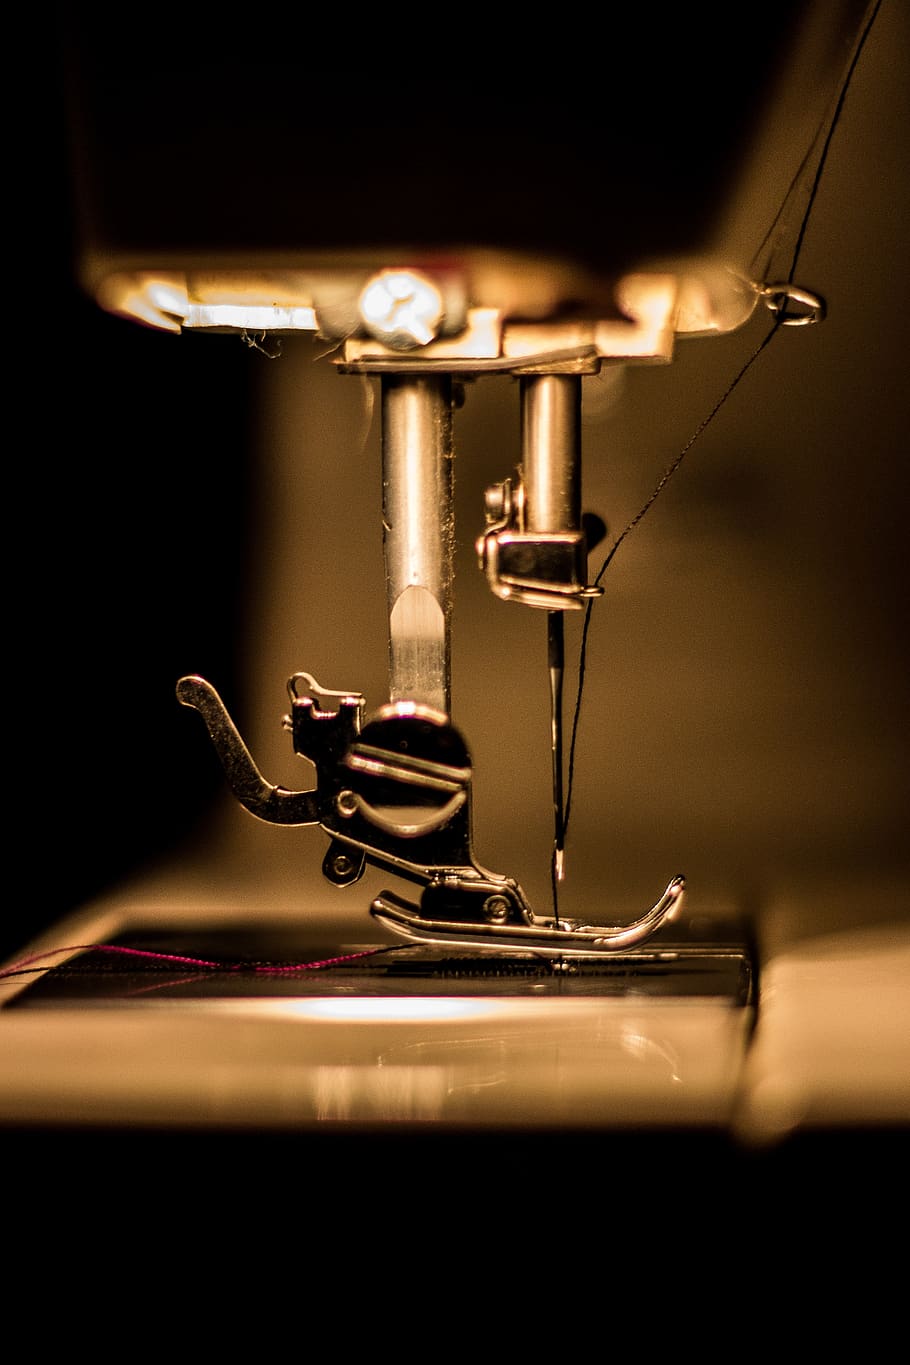 macro, sewing machine, tool, sew, fabric, pattern, black, embroidery, white, tinker